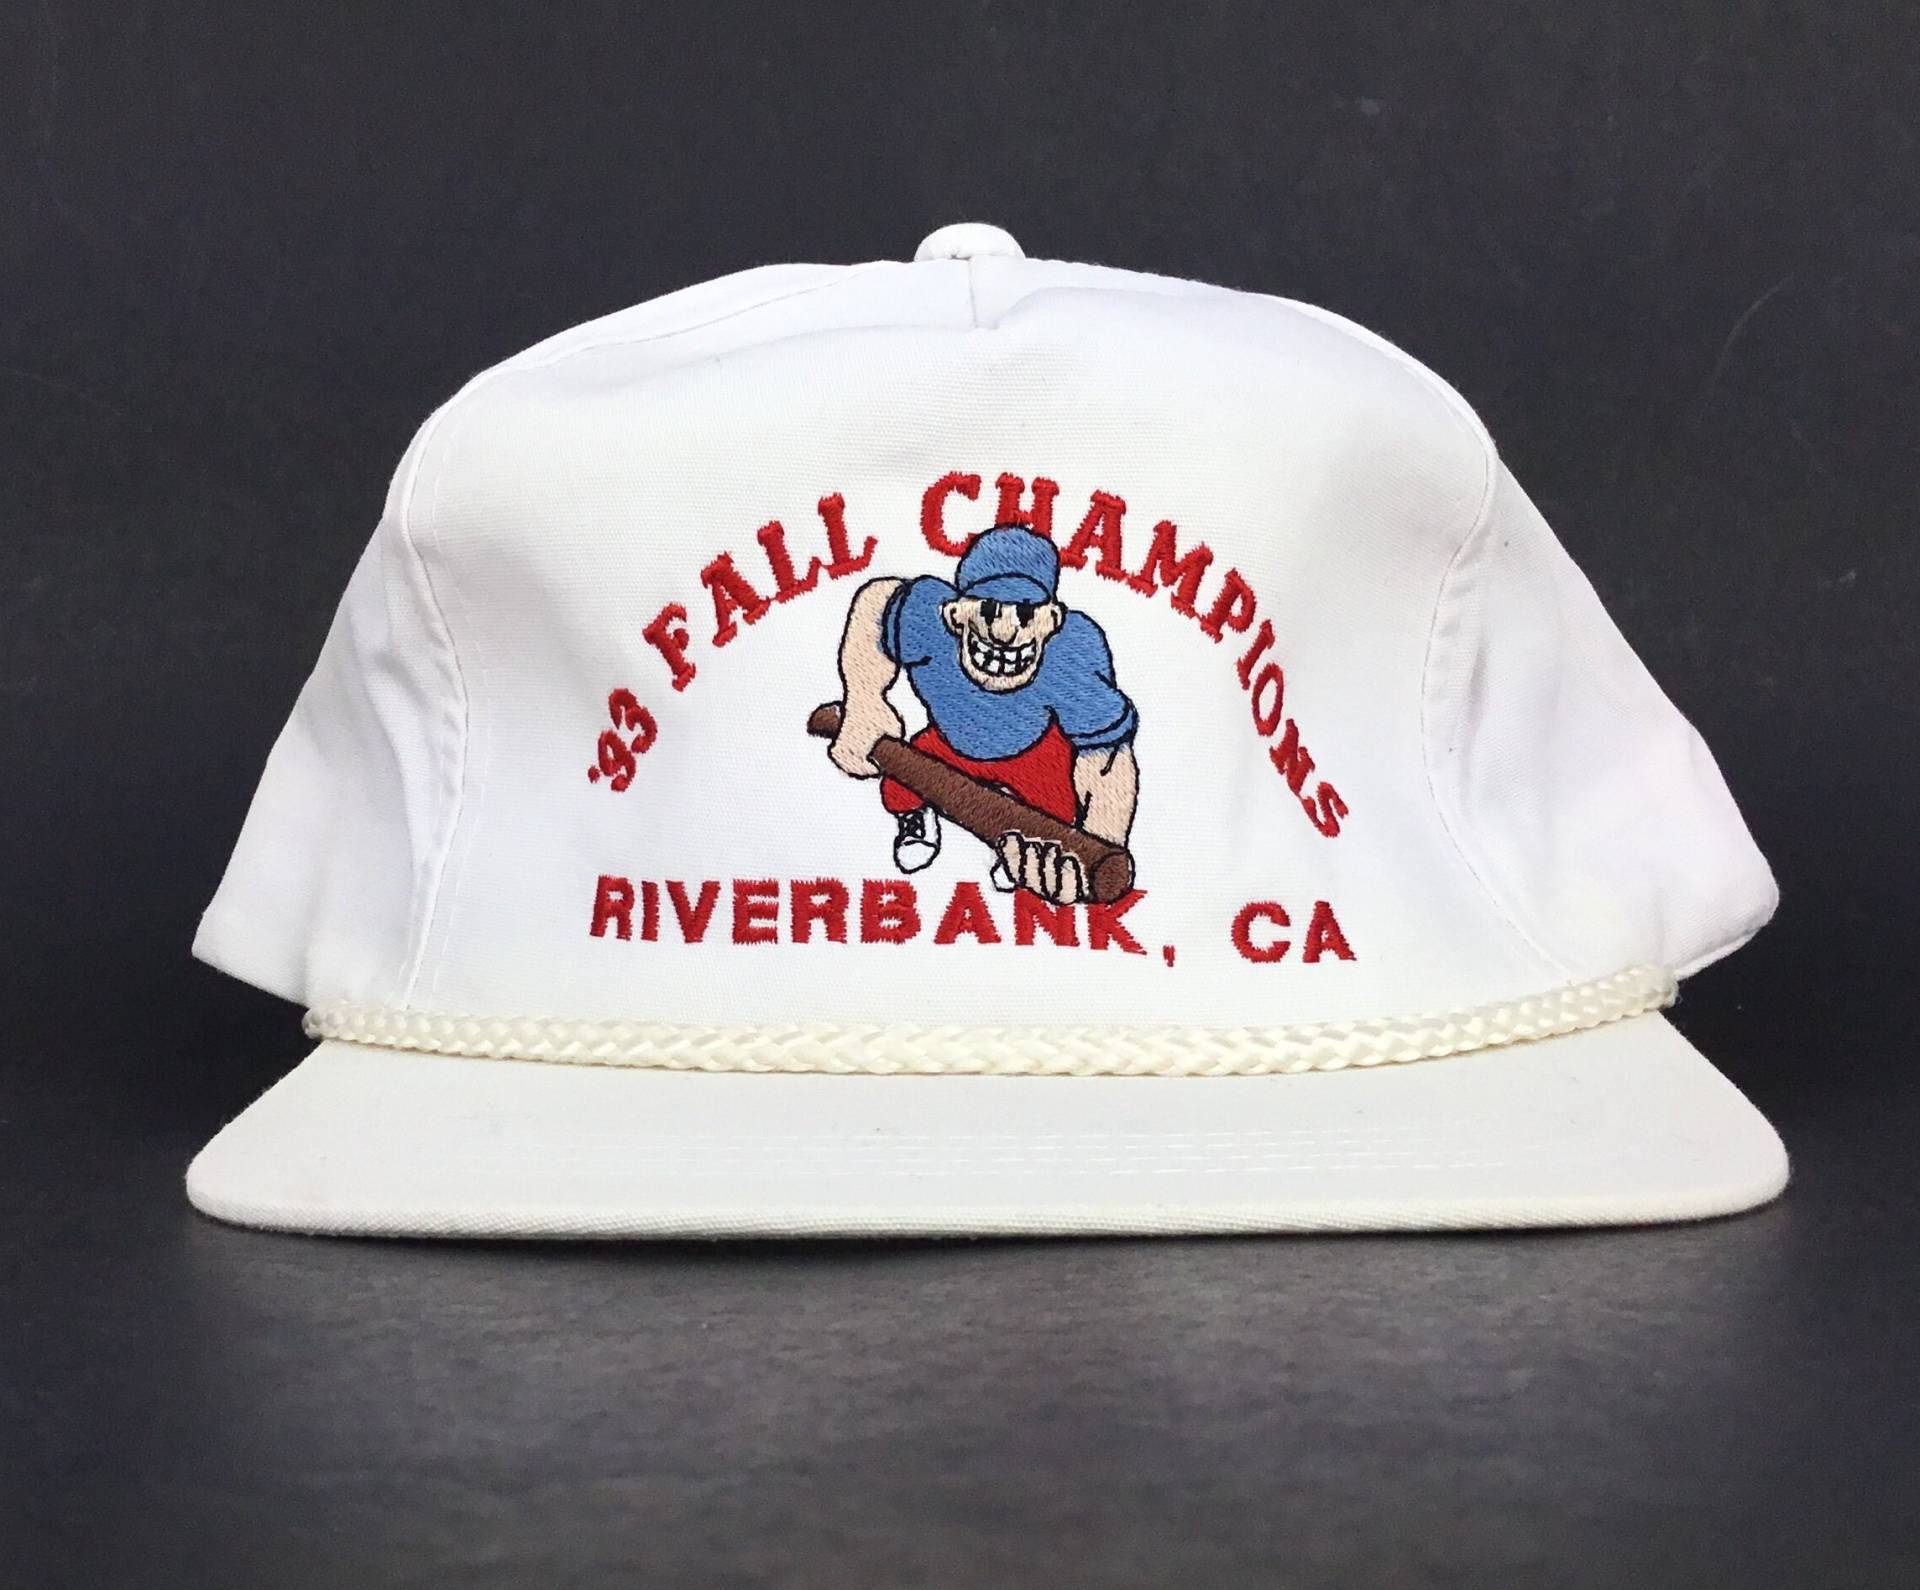 Vintage 1993 Fall Champions Riverbank Ca California White Baseball Cap Hat Snapback Mens Size Cotton Poly Blend von arm90210